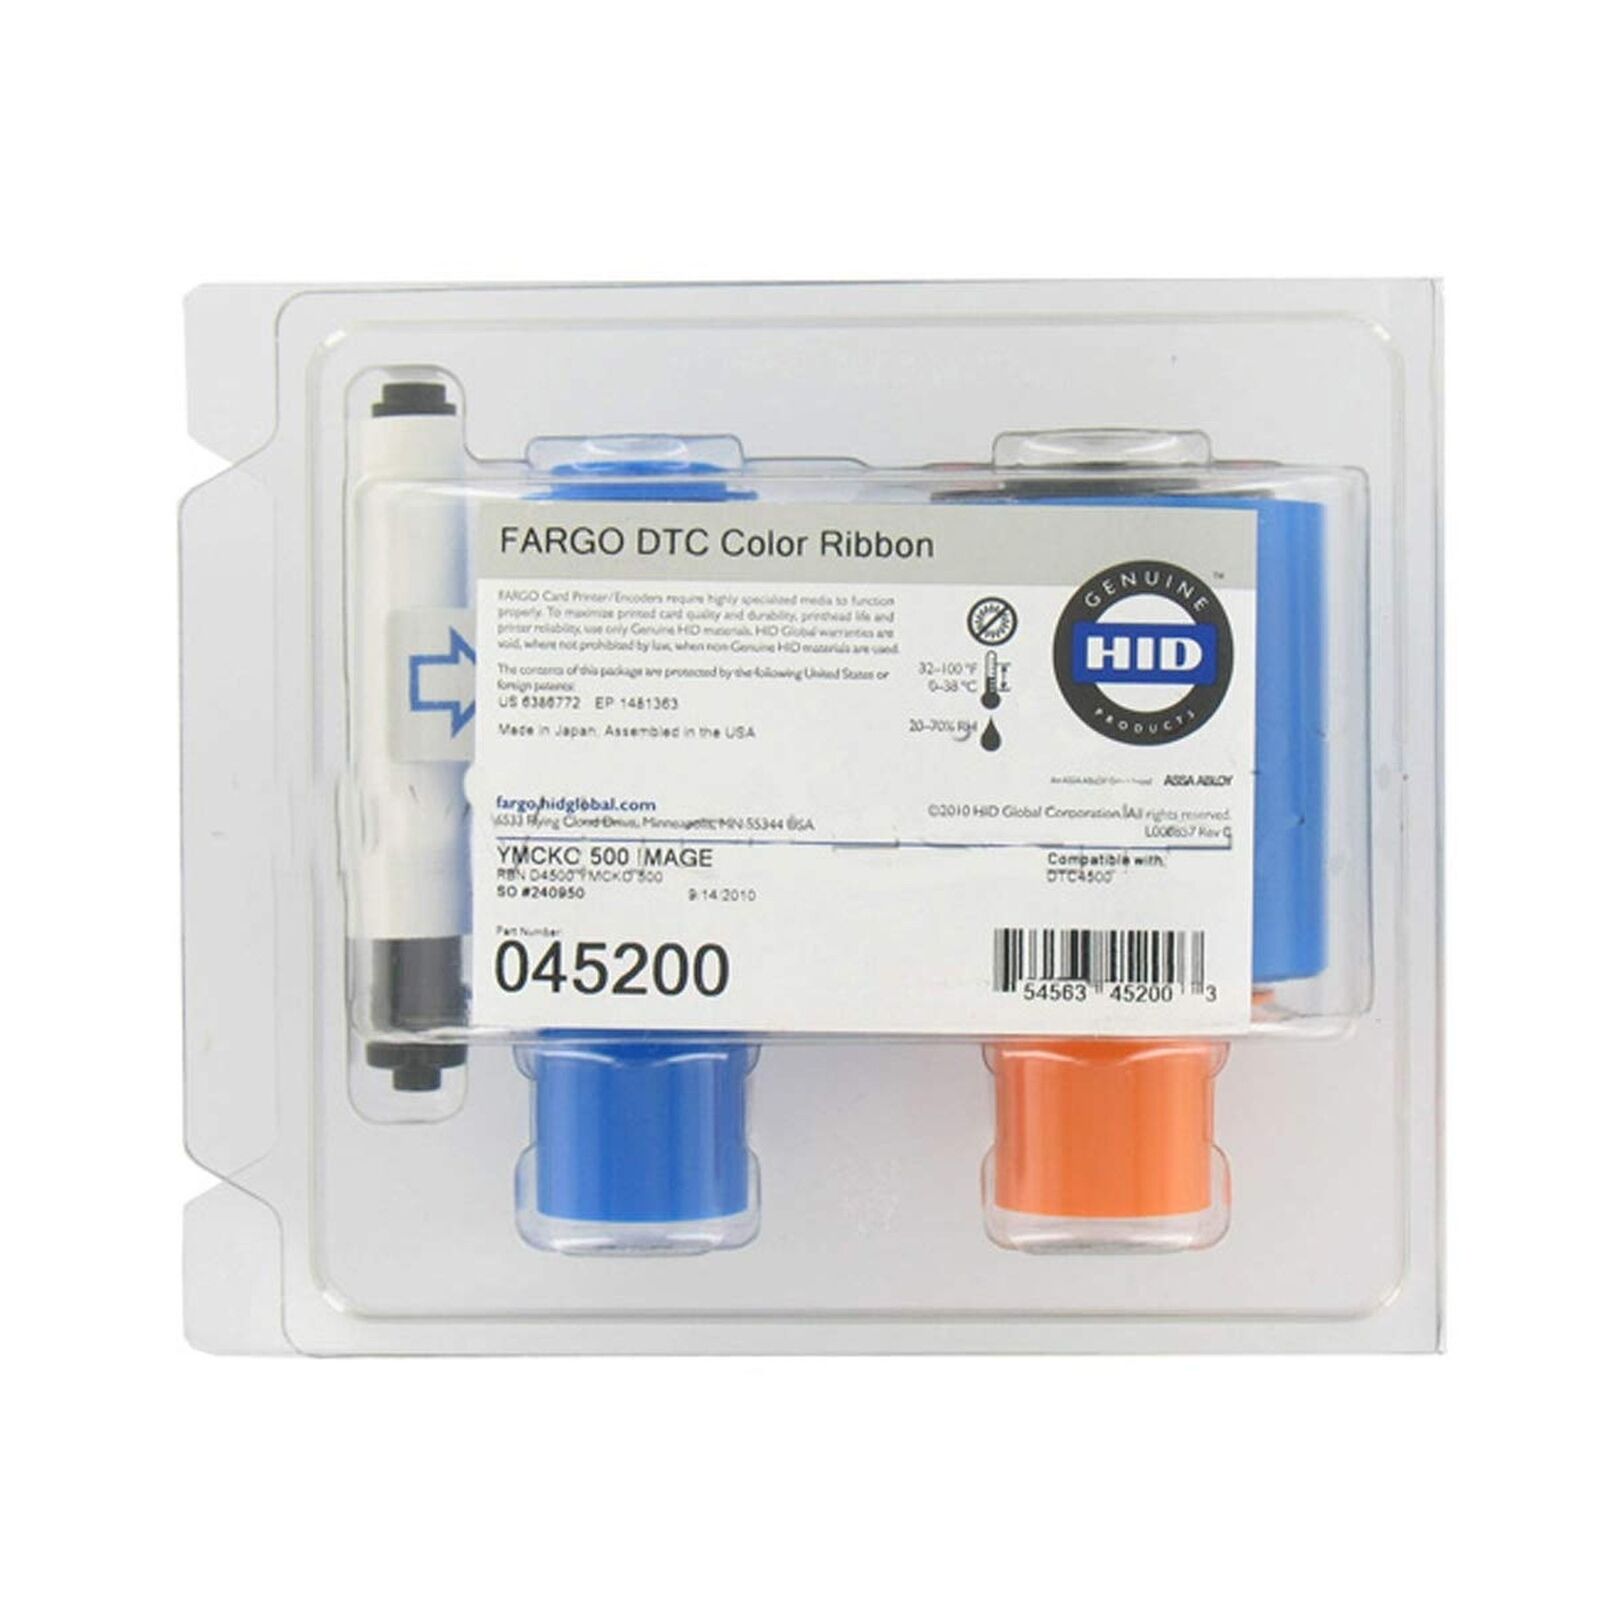 Genuine Fargo 45200 YMCKO Color Ribbon for Model DTC4500e Printer